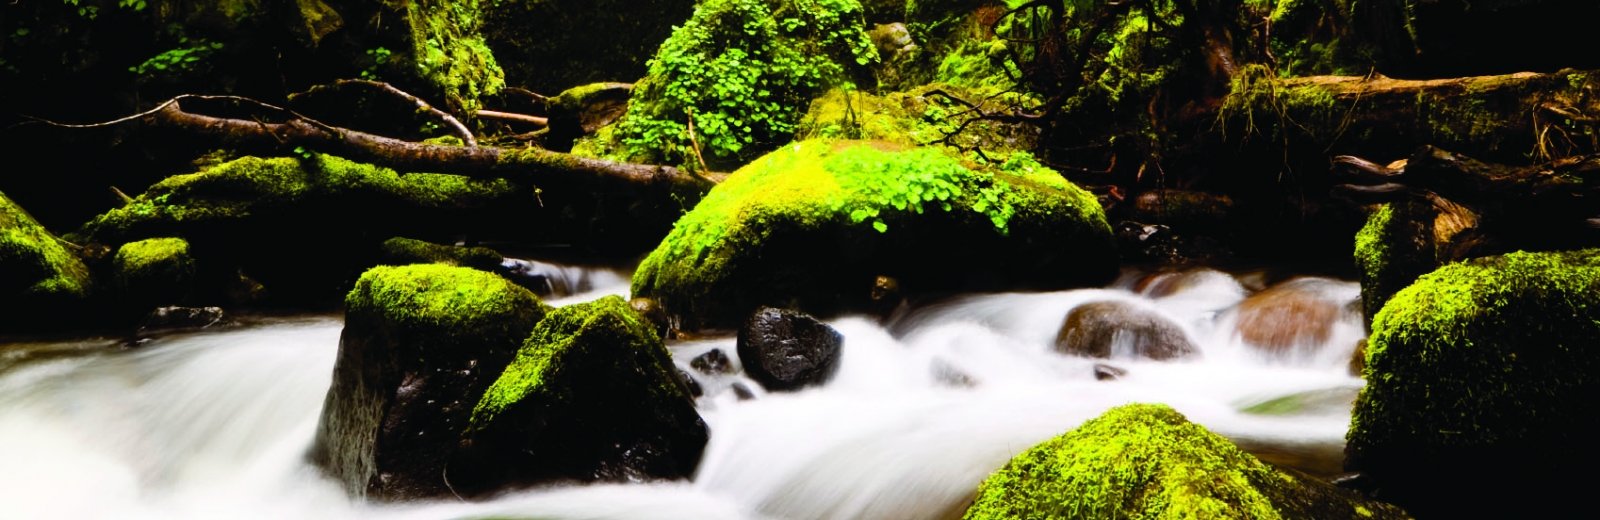 Mossy rocks in a stream